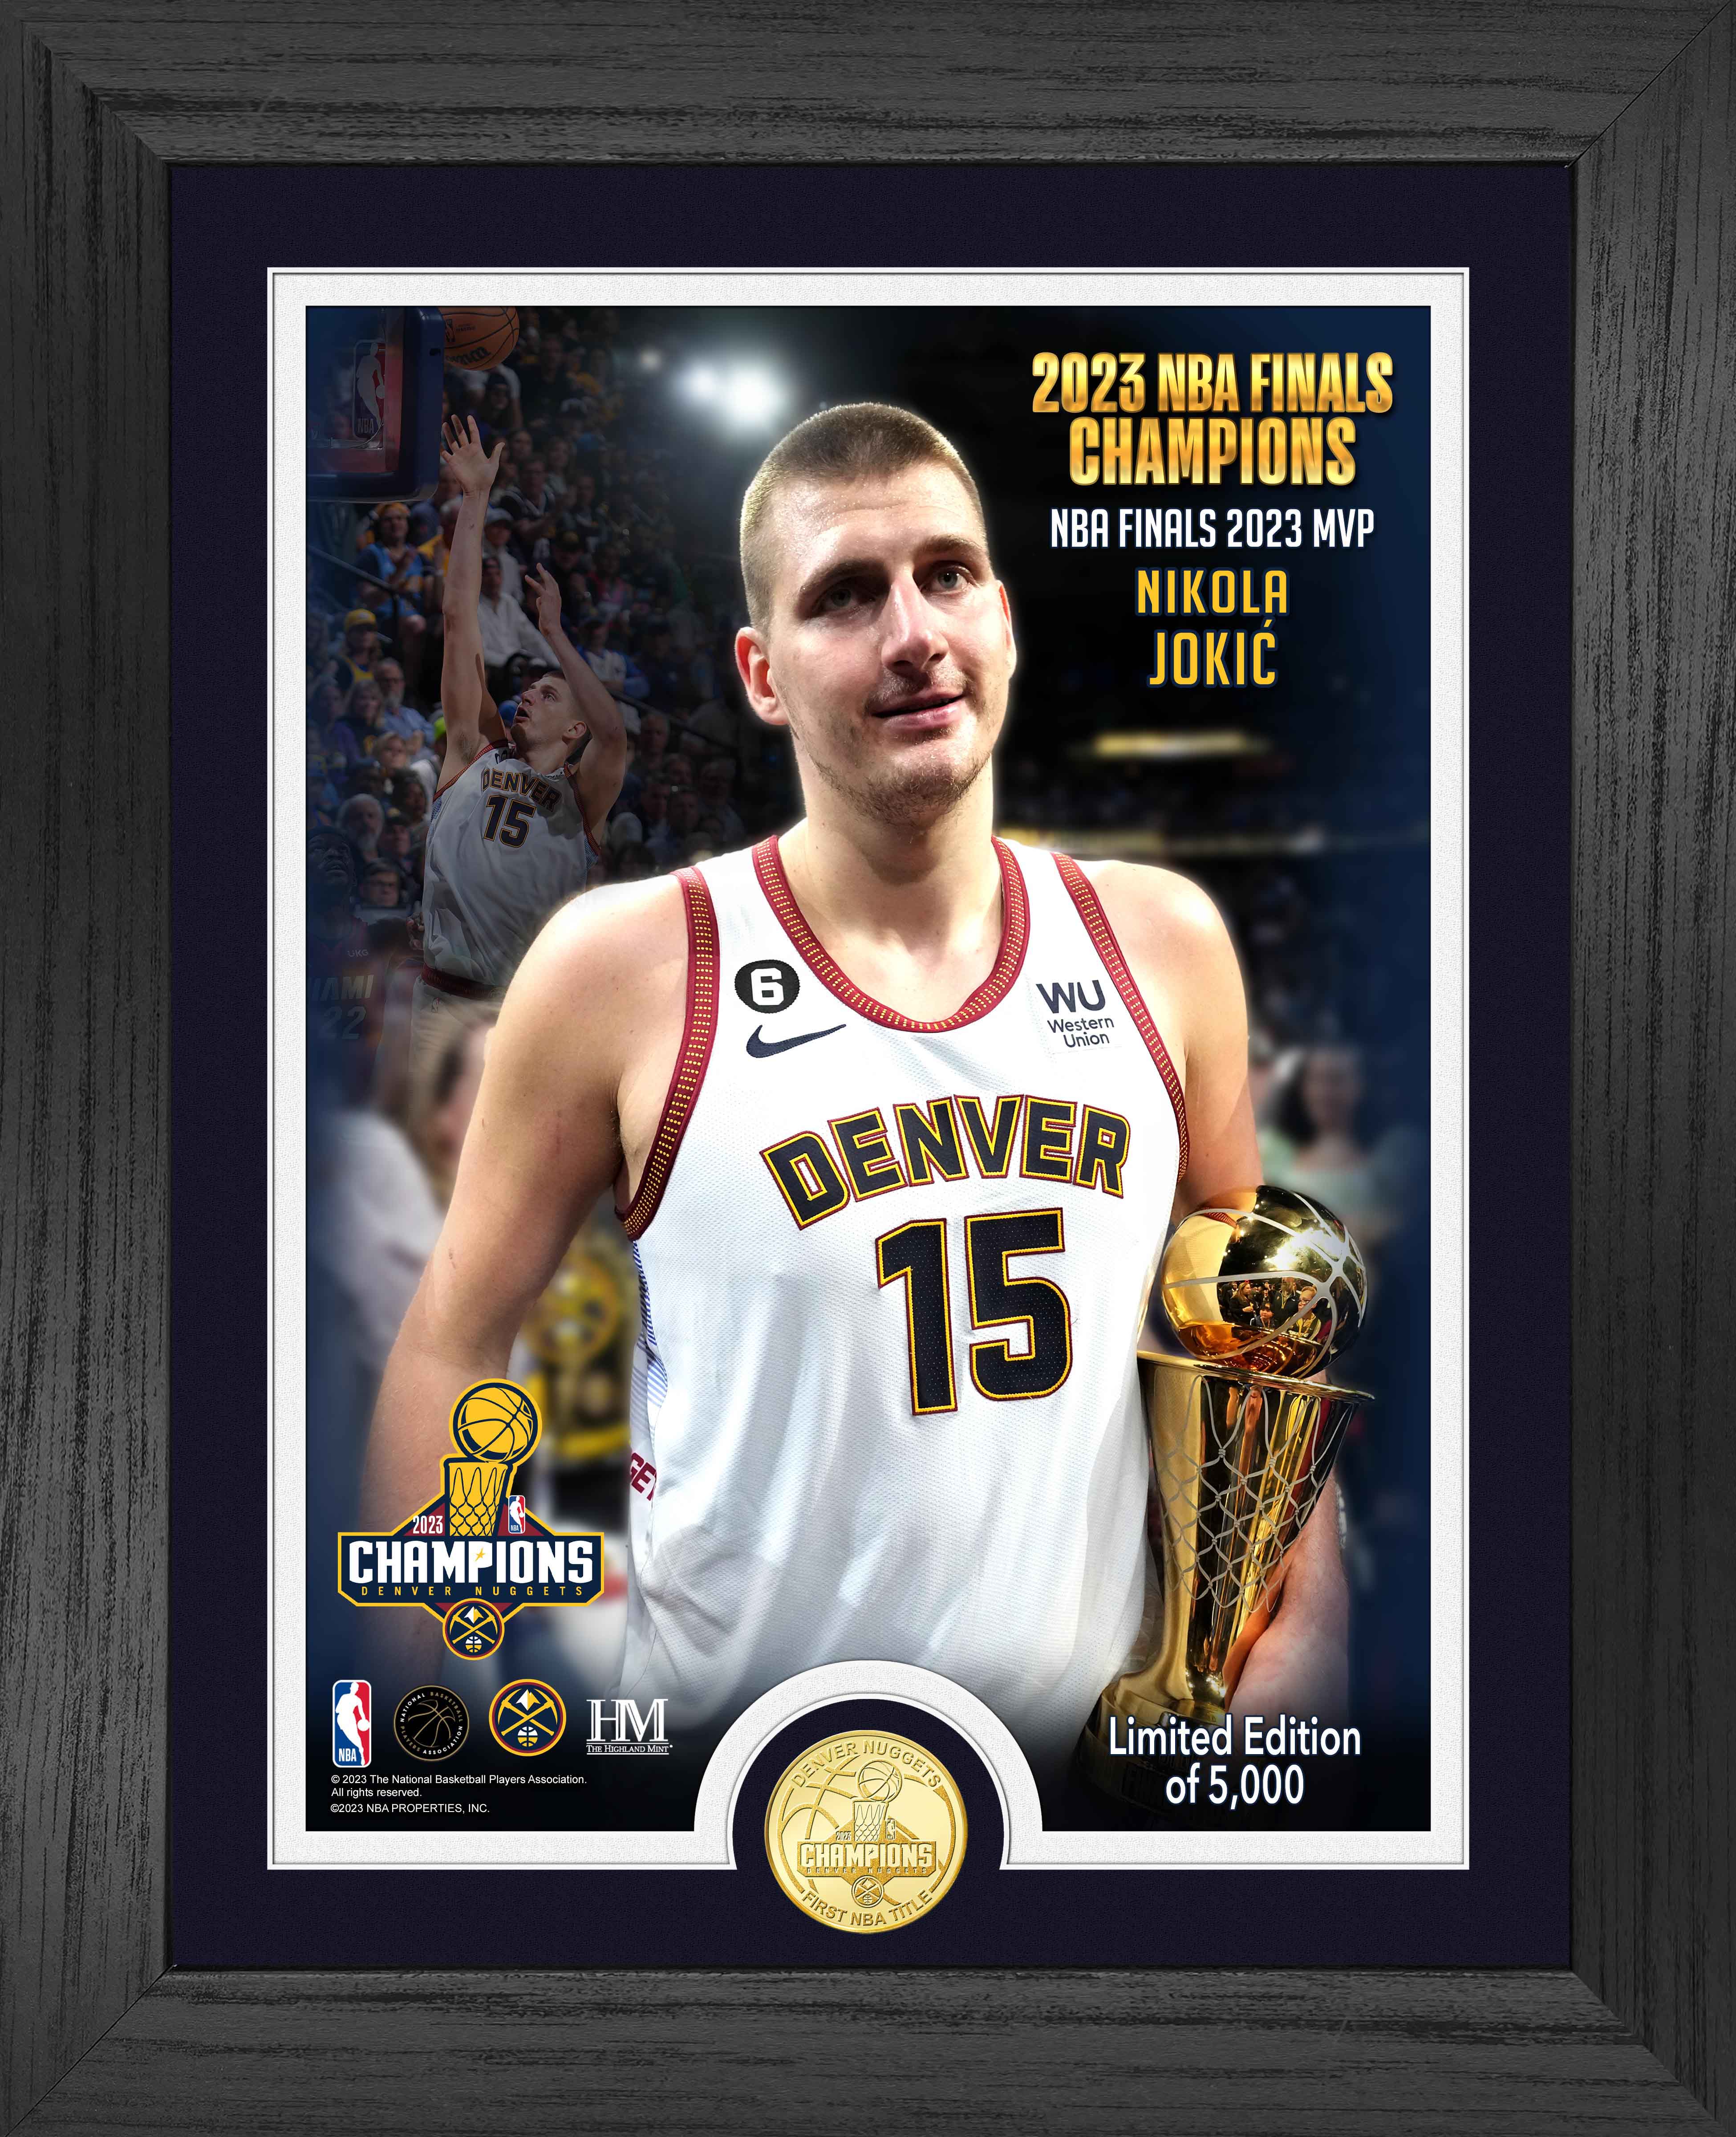 Official Nuggets Collectibles, Nuggets NBA Champs Memorabilia, Autographed  Merchandise